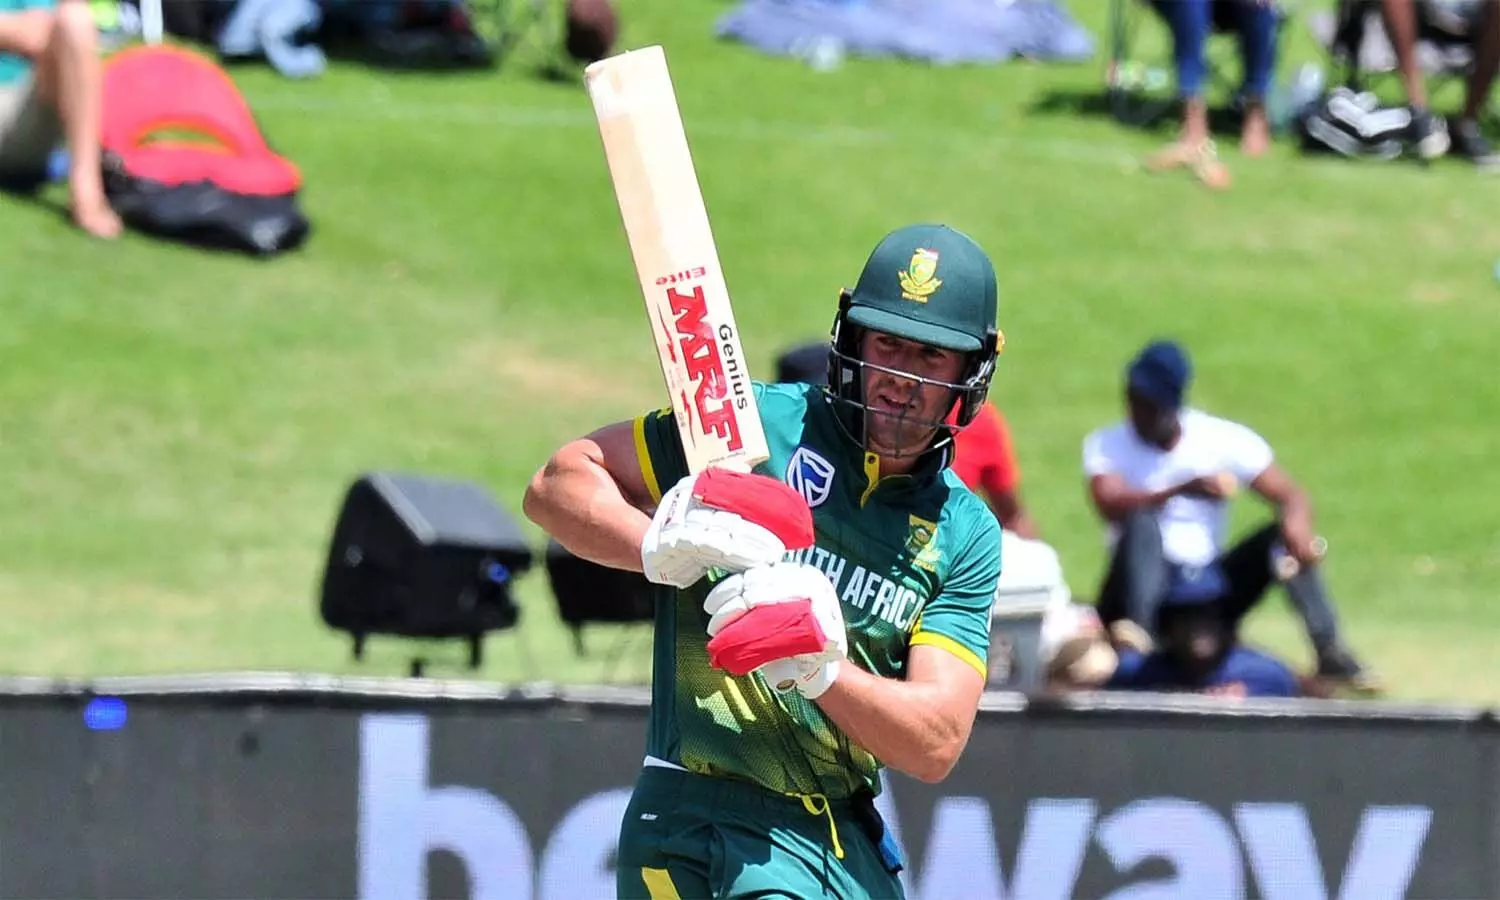 AB de Villiers retirement remains final: CSA after discussions with the batsman